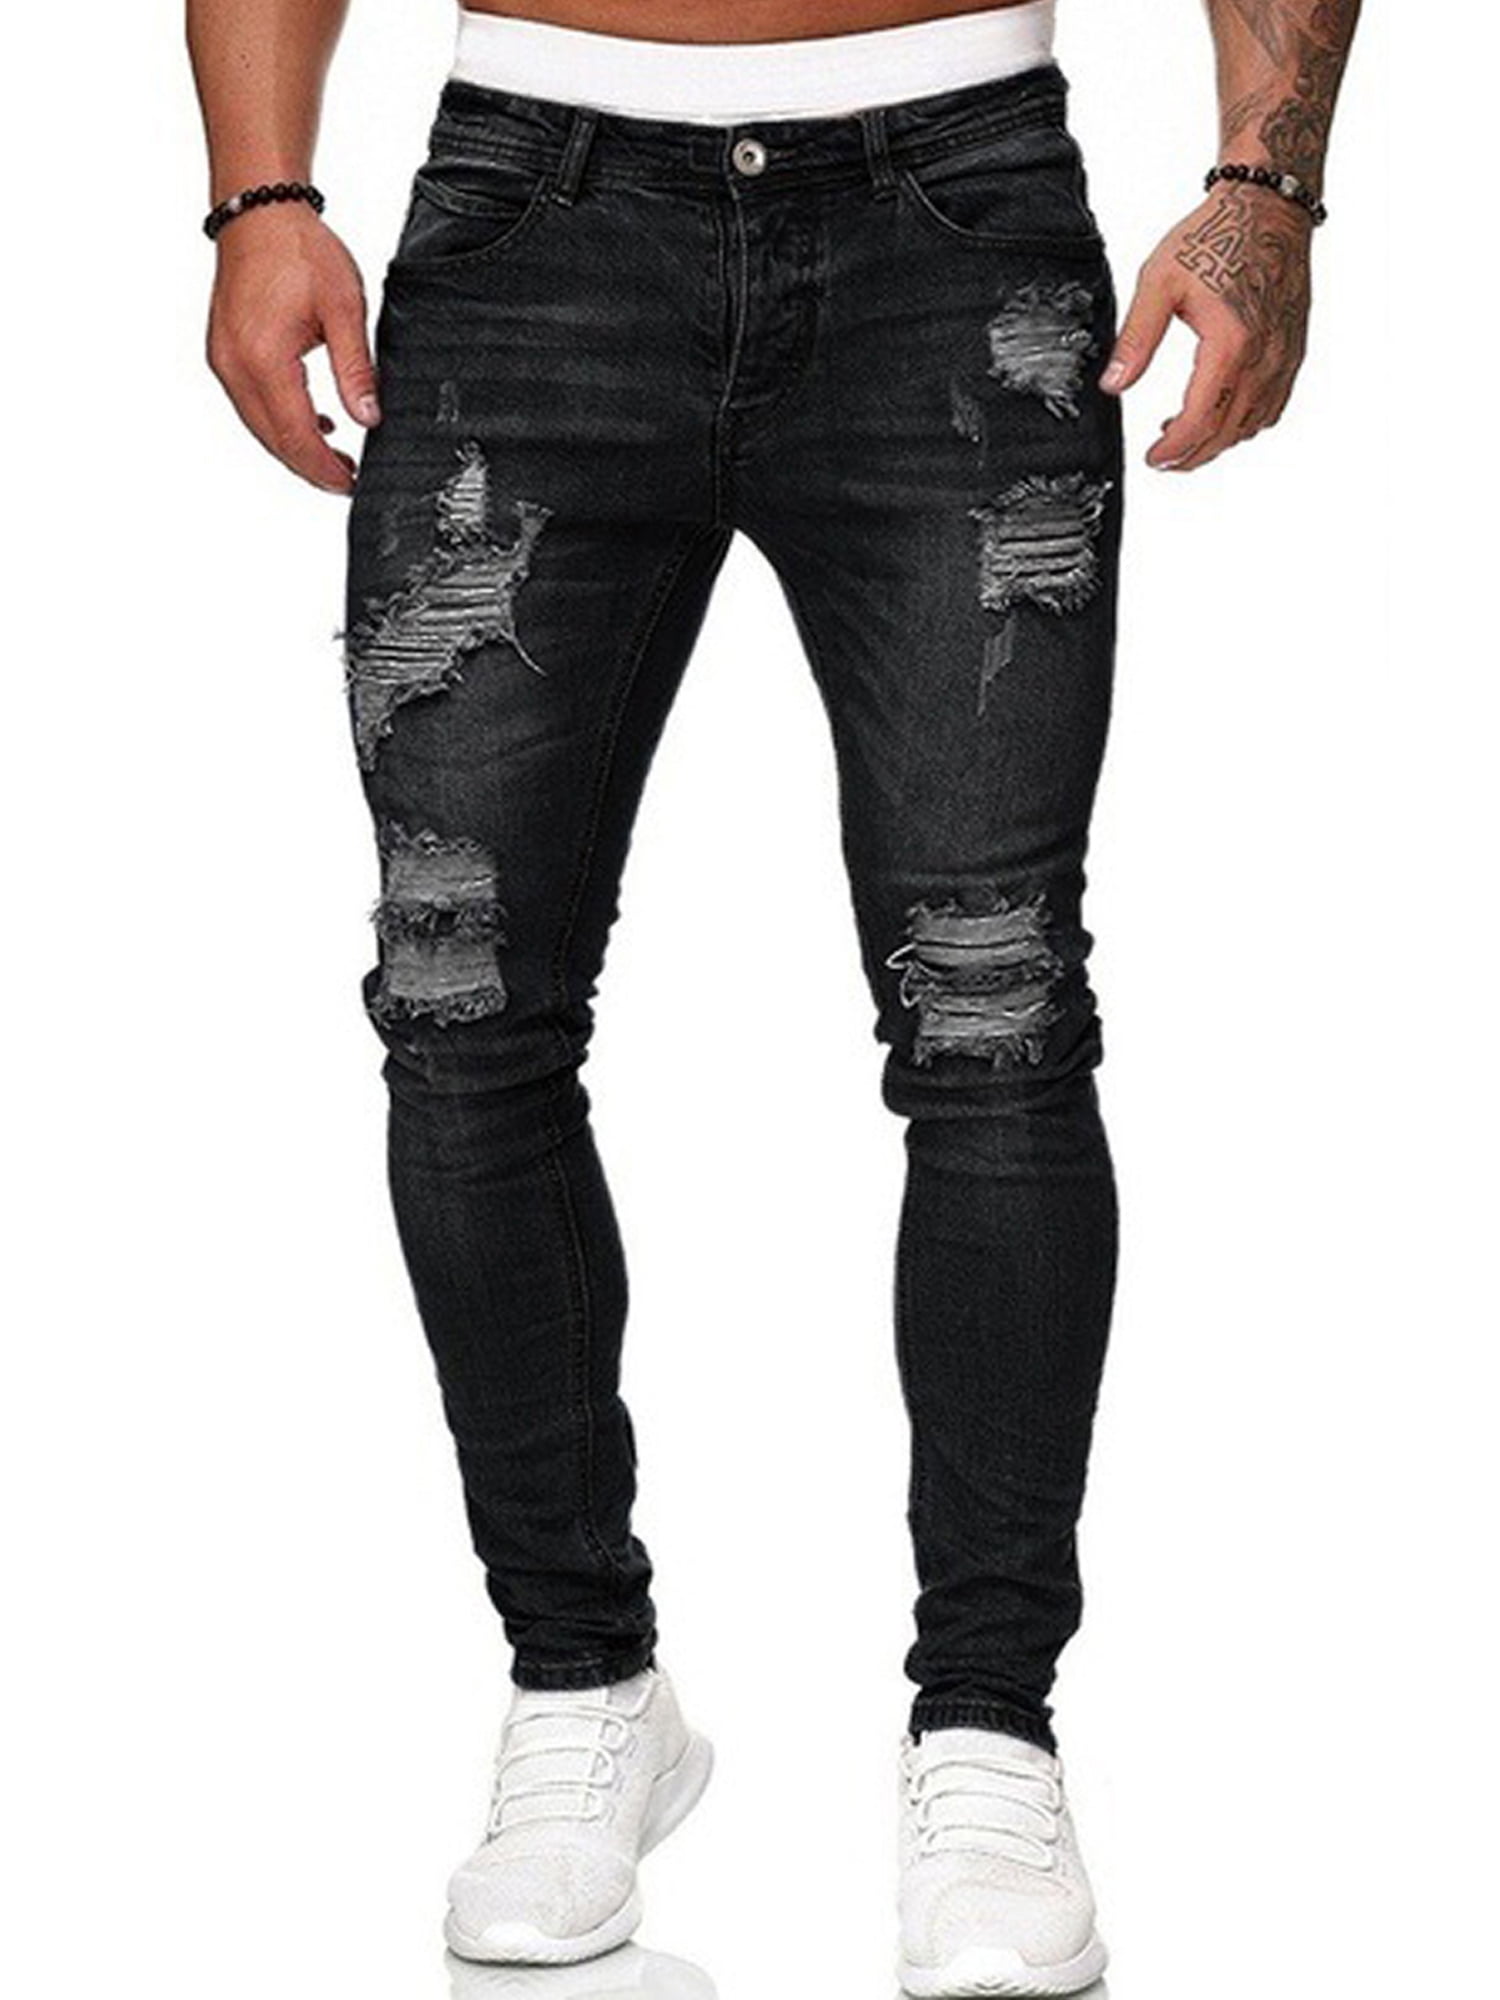 Large Hole Distressed Jeans | Trendy pants, Trendy jeans, Clothes design